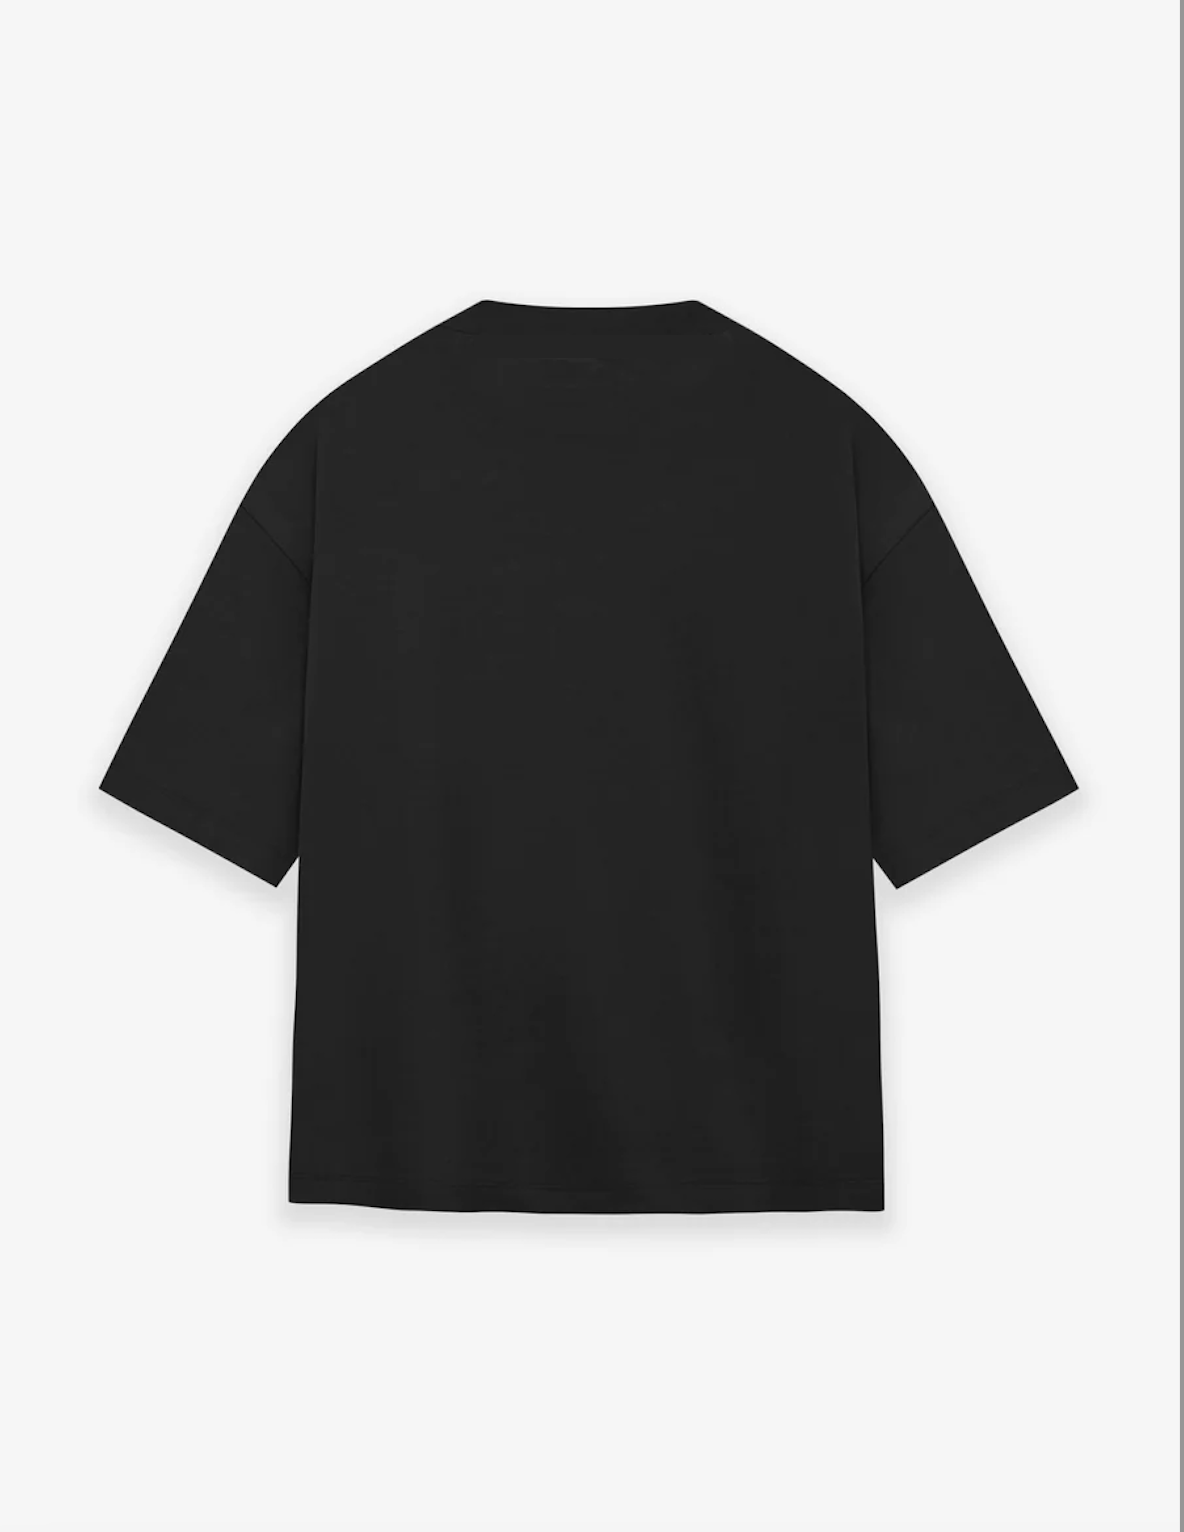 Chris Xtra X Black oversized T-shirt